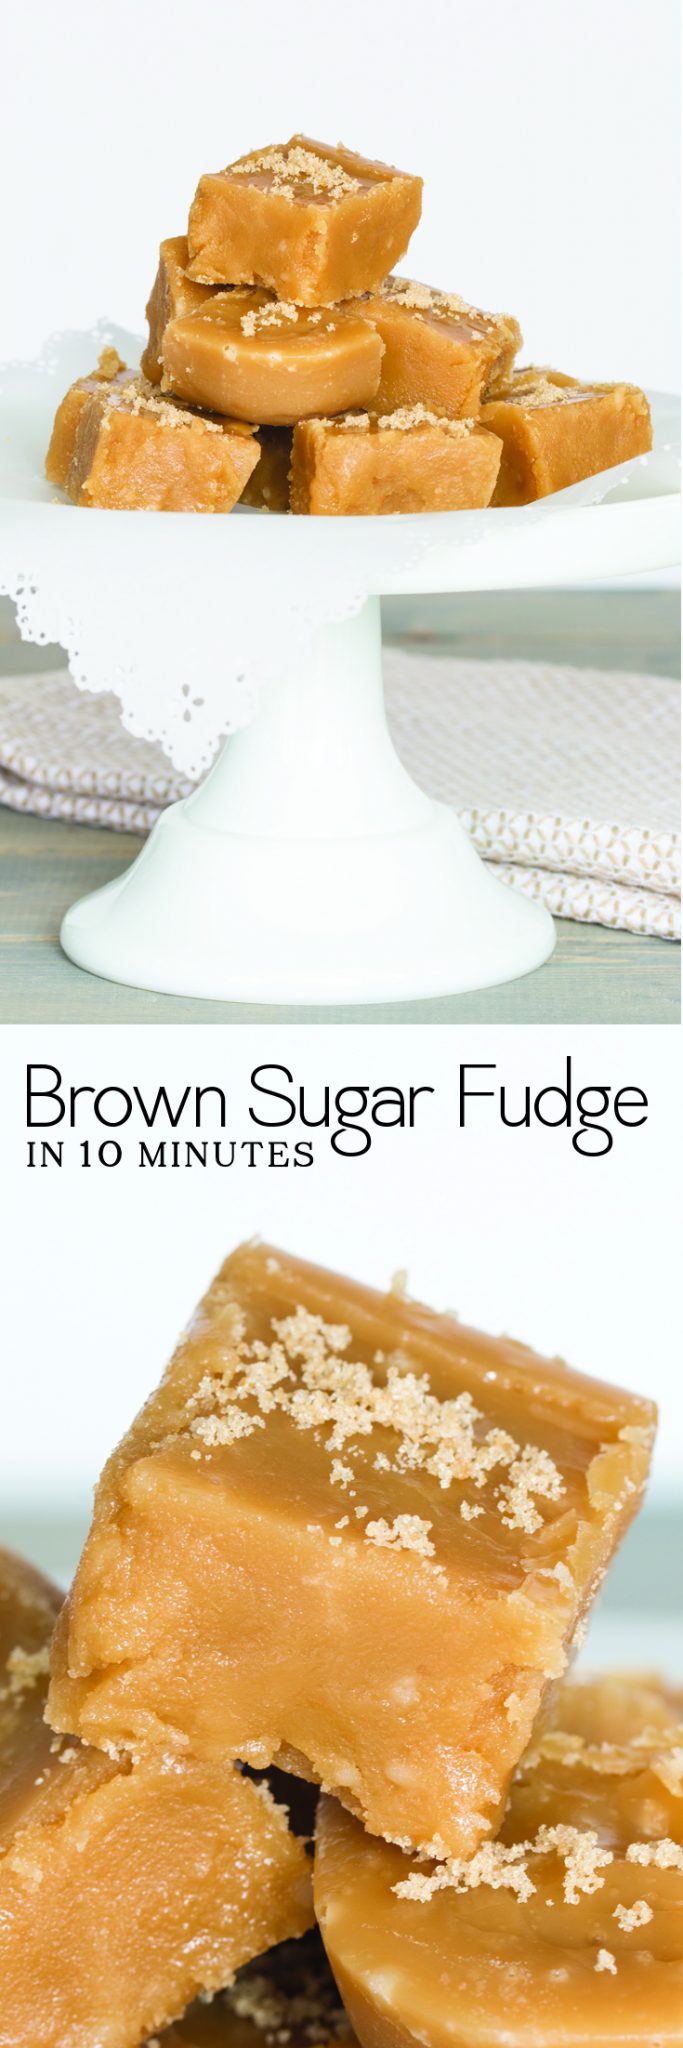 brown sugar fudge image collage